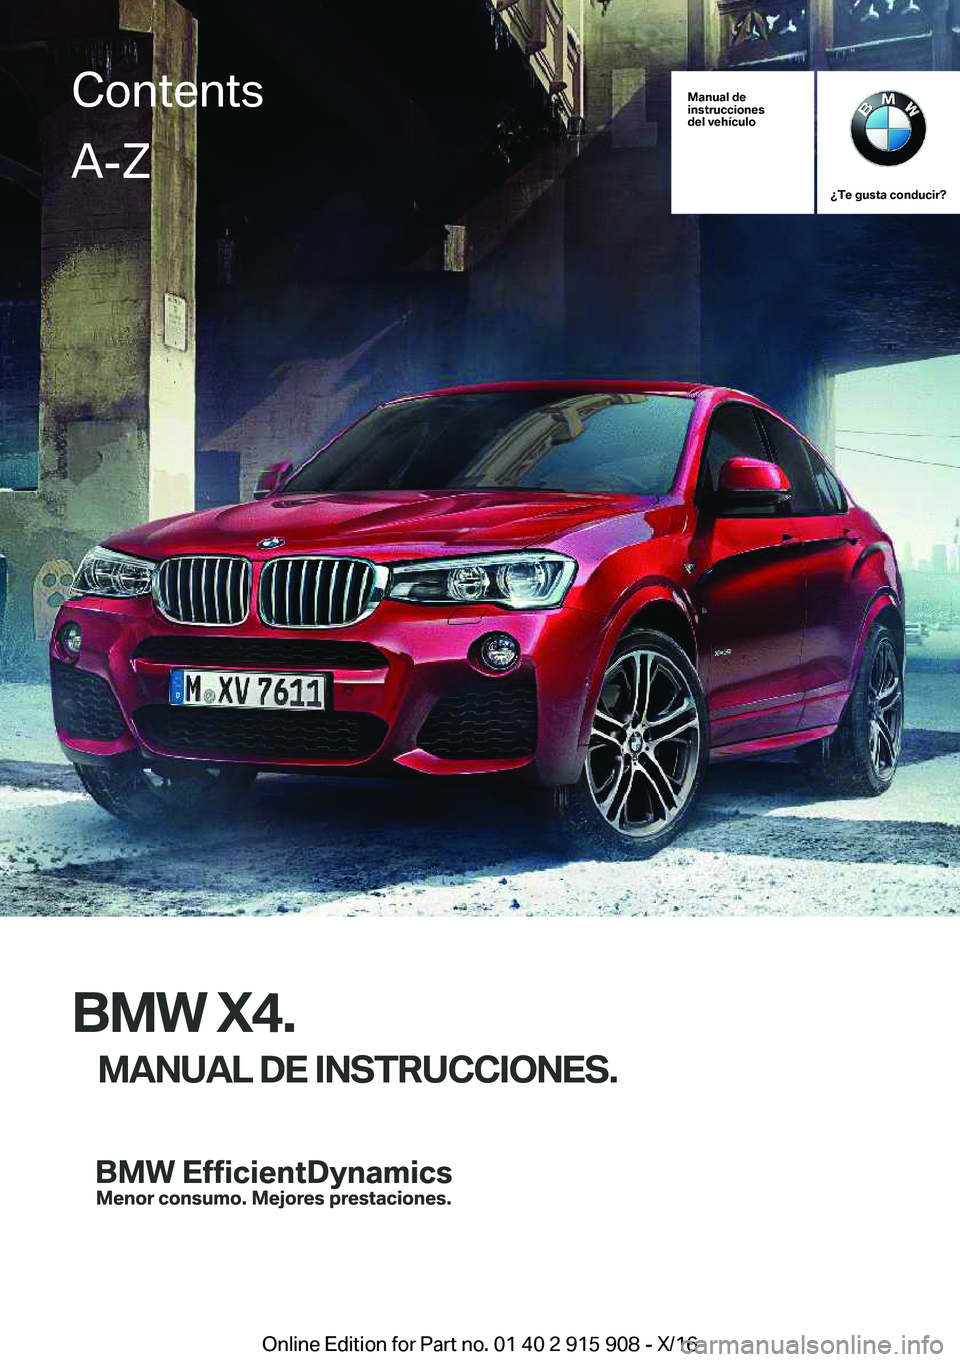 BMW X4 2017  Manuales de Empleo (in Spanish) �M�a�n�u�a�l��d�e
�i�n�s�t�r�u�c�c�i�o�n�e�s
�d�e�l��v�e�h�